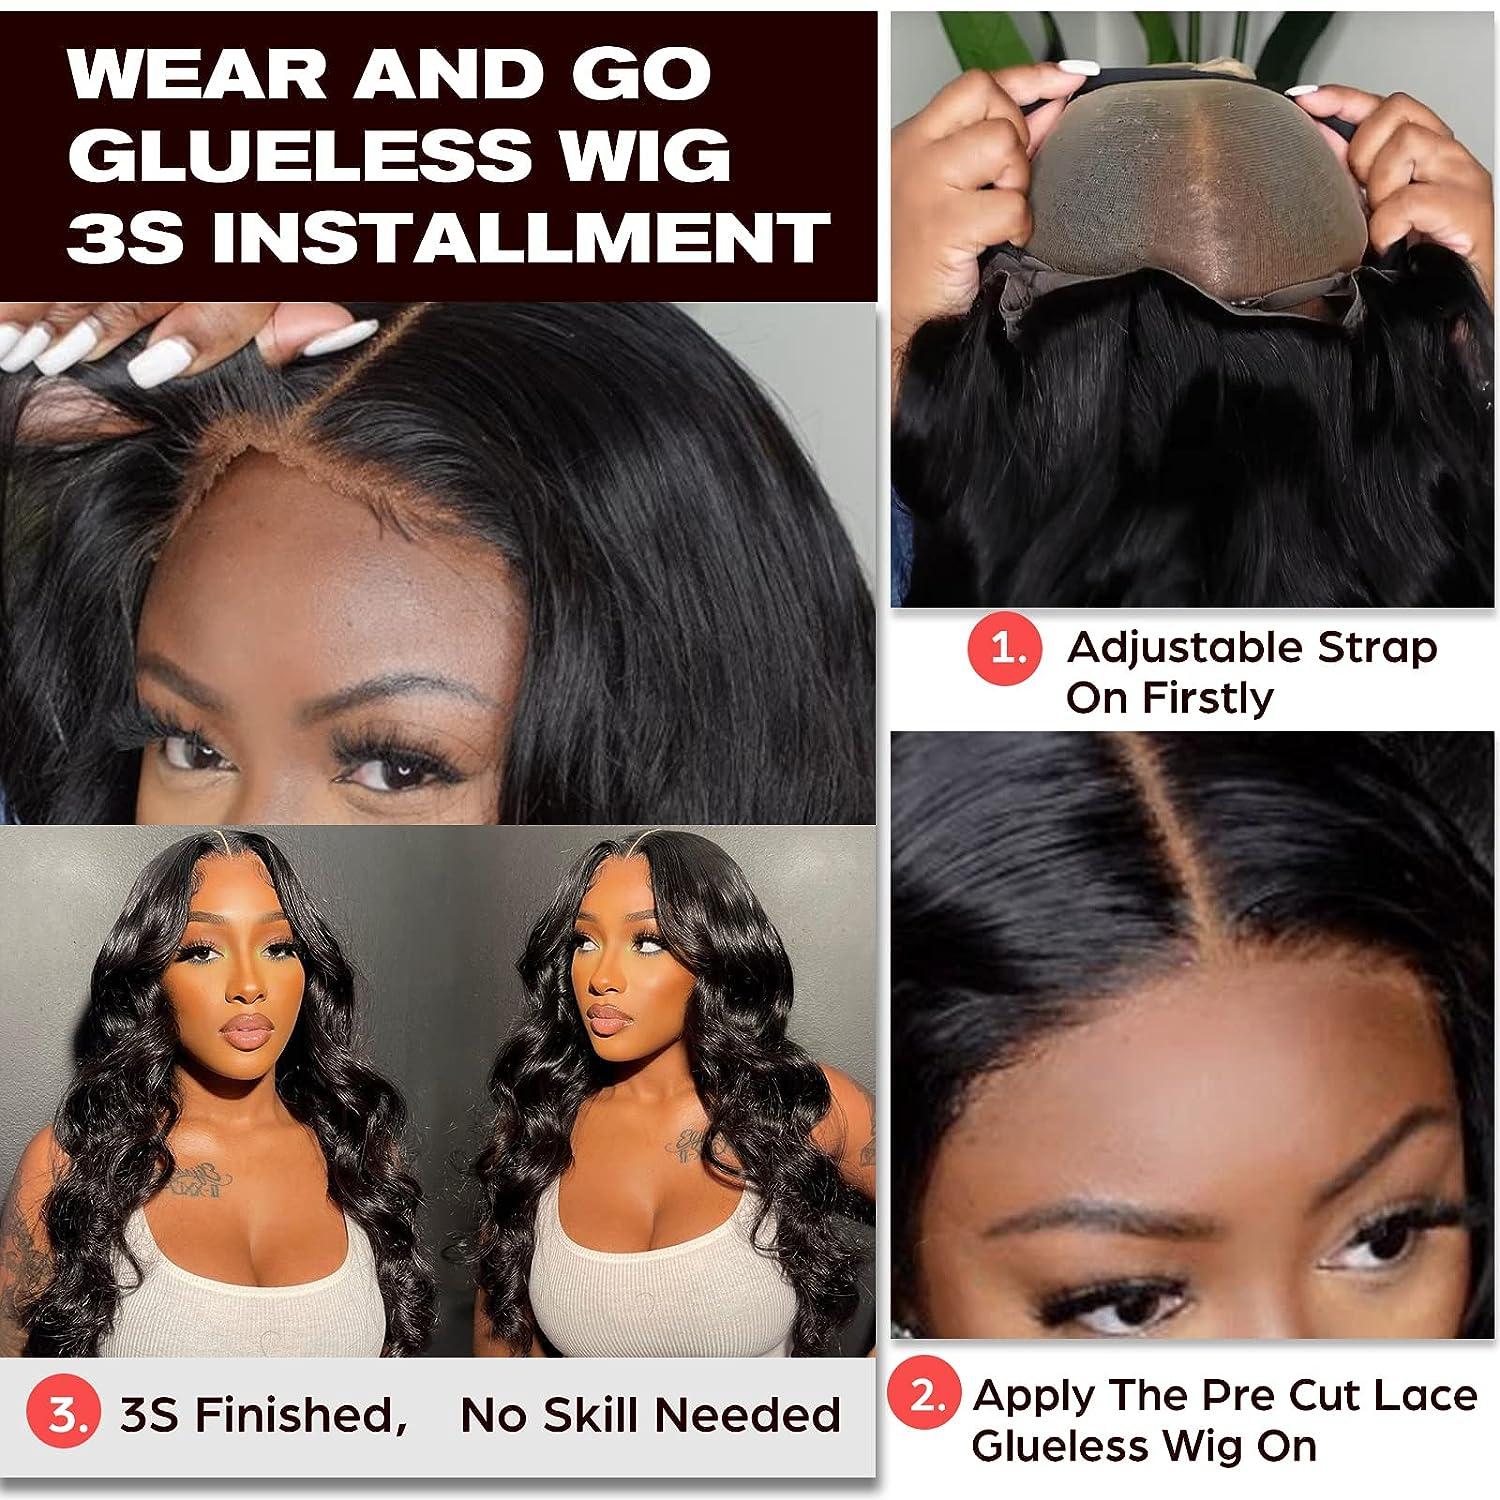  sdamey Wear and Go Glueless Wig for Beginners